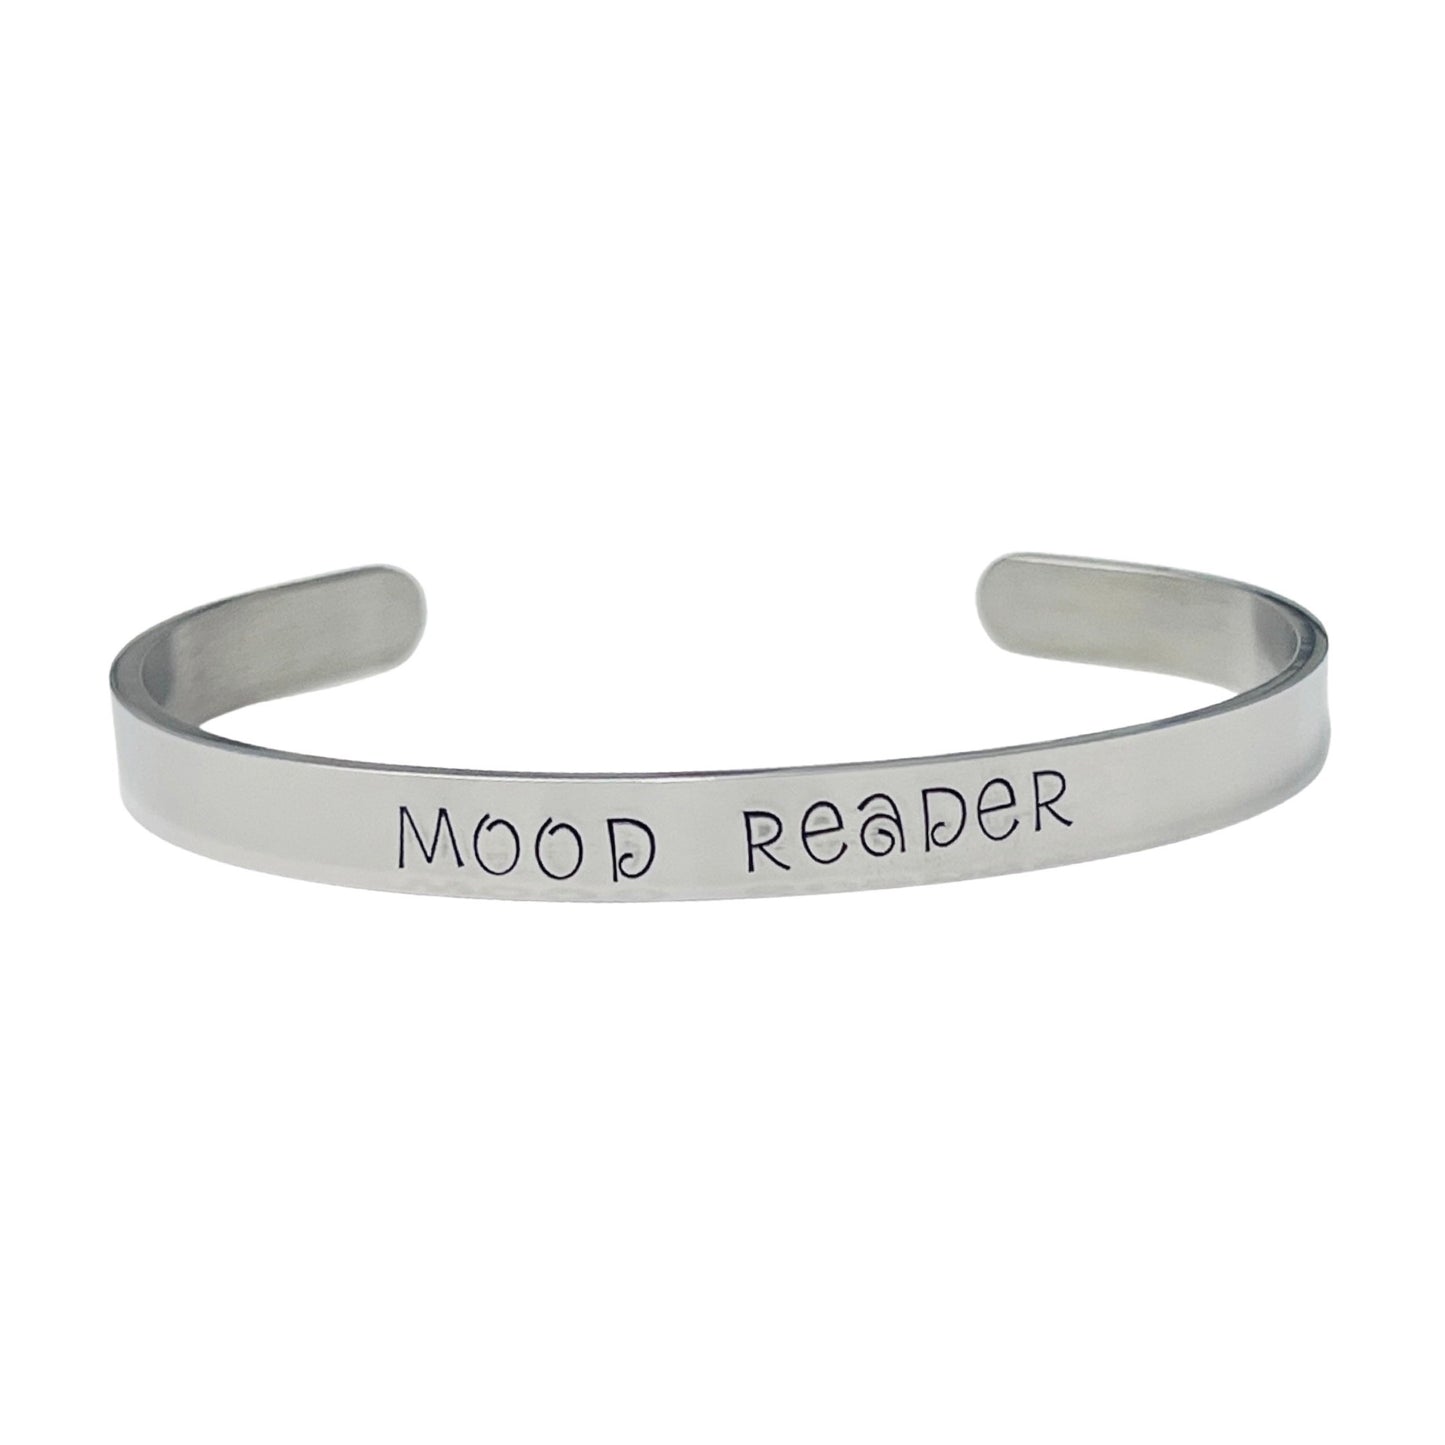 Mood Reader | Cuff Bracelet